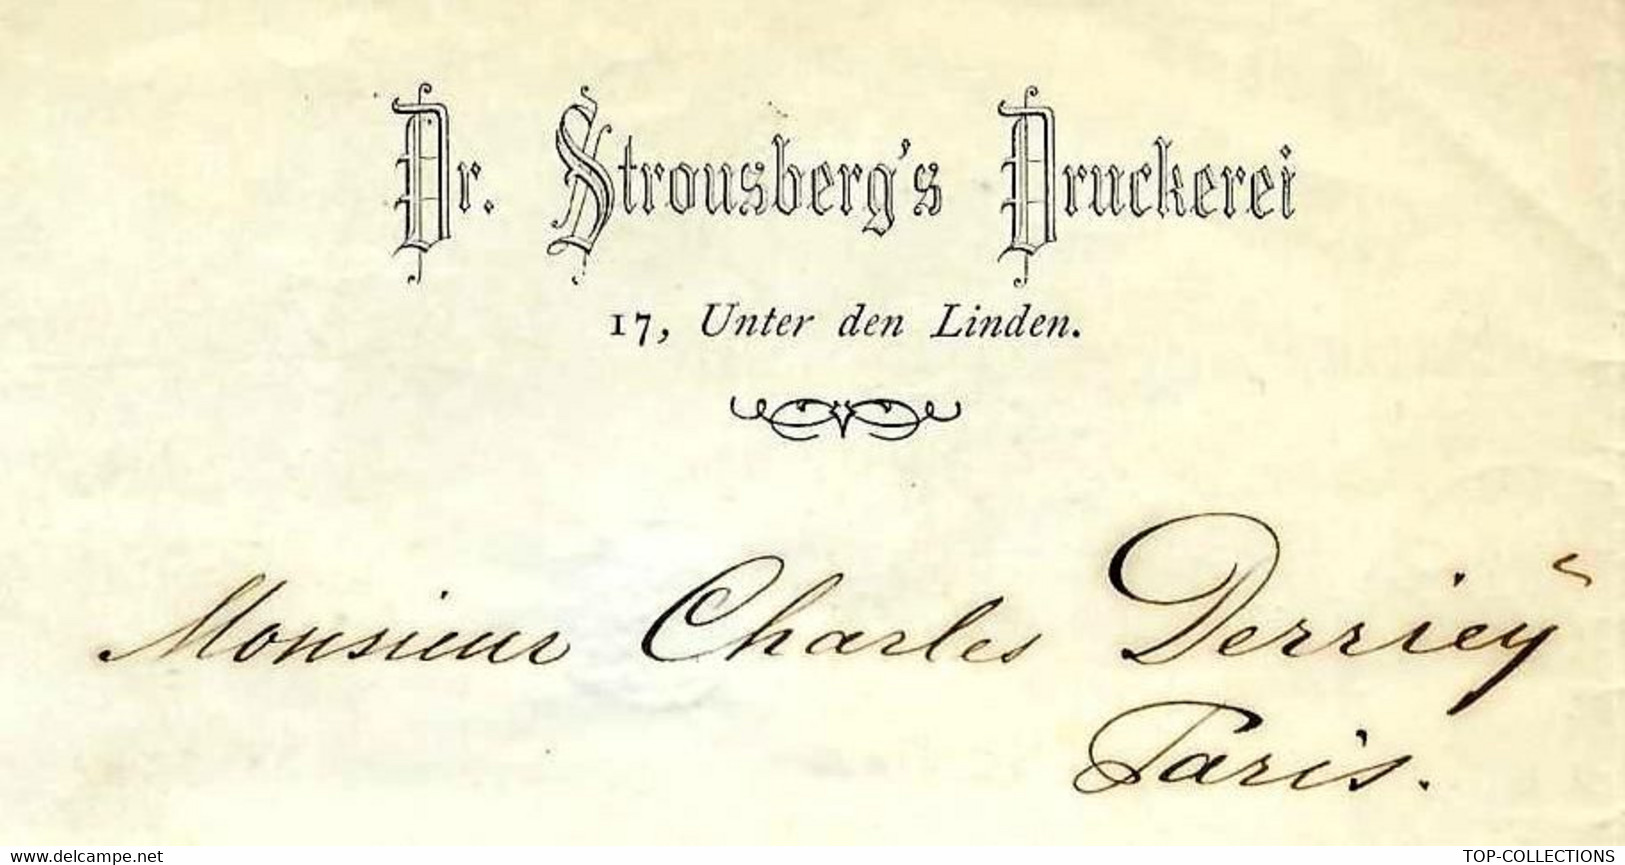 JUDAICA 1870  Berlin Dr Strousberg S Druckerei Unterden Linden Berlin  Ch. Derriey Paris Graveur Fonderie  Imprimerie - Documents Historiques